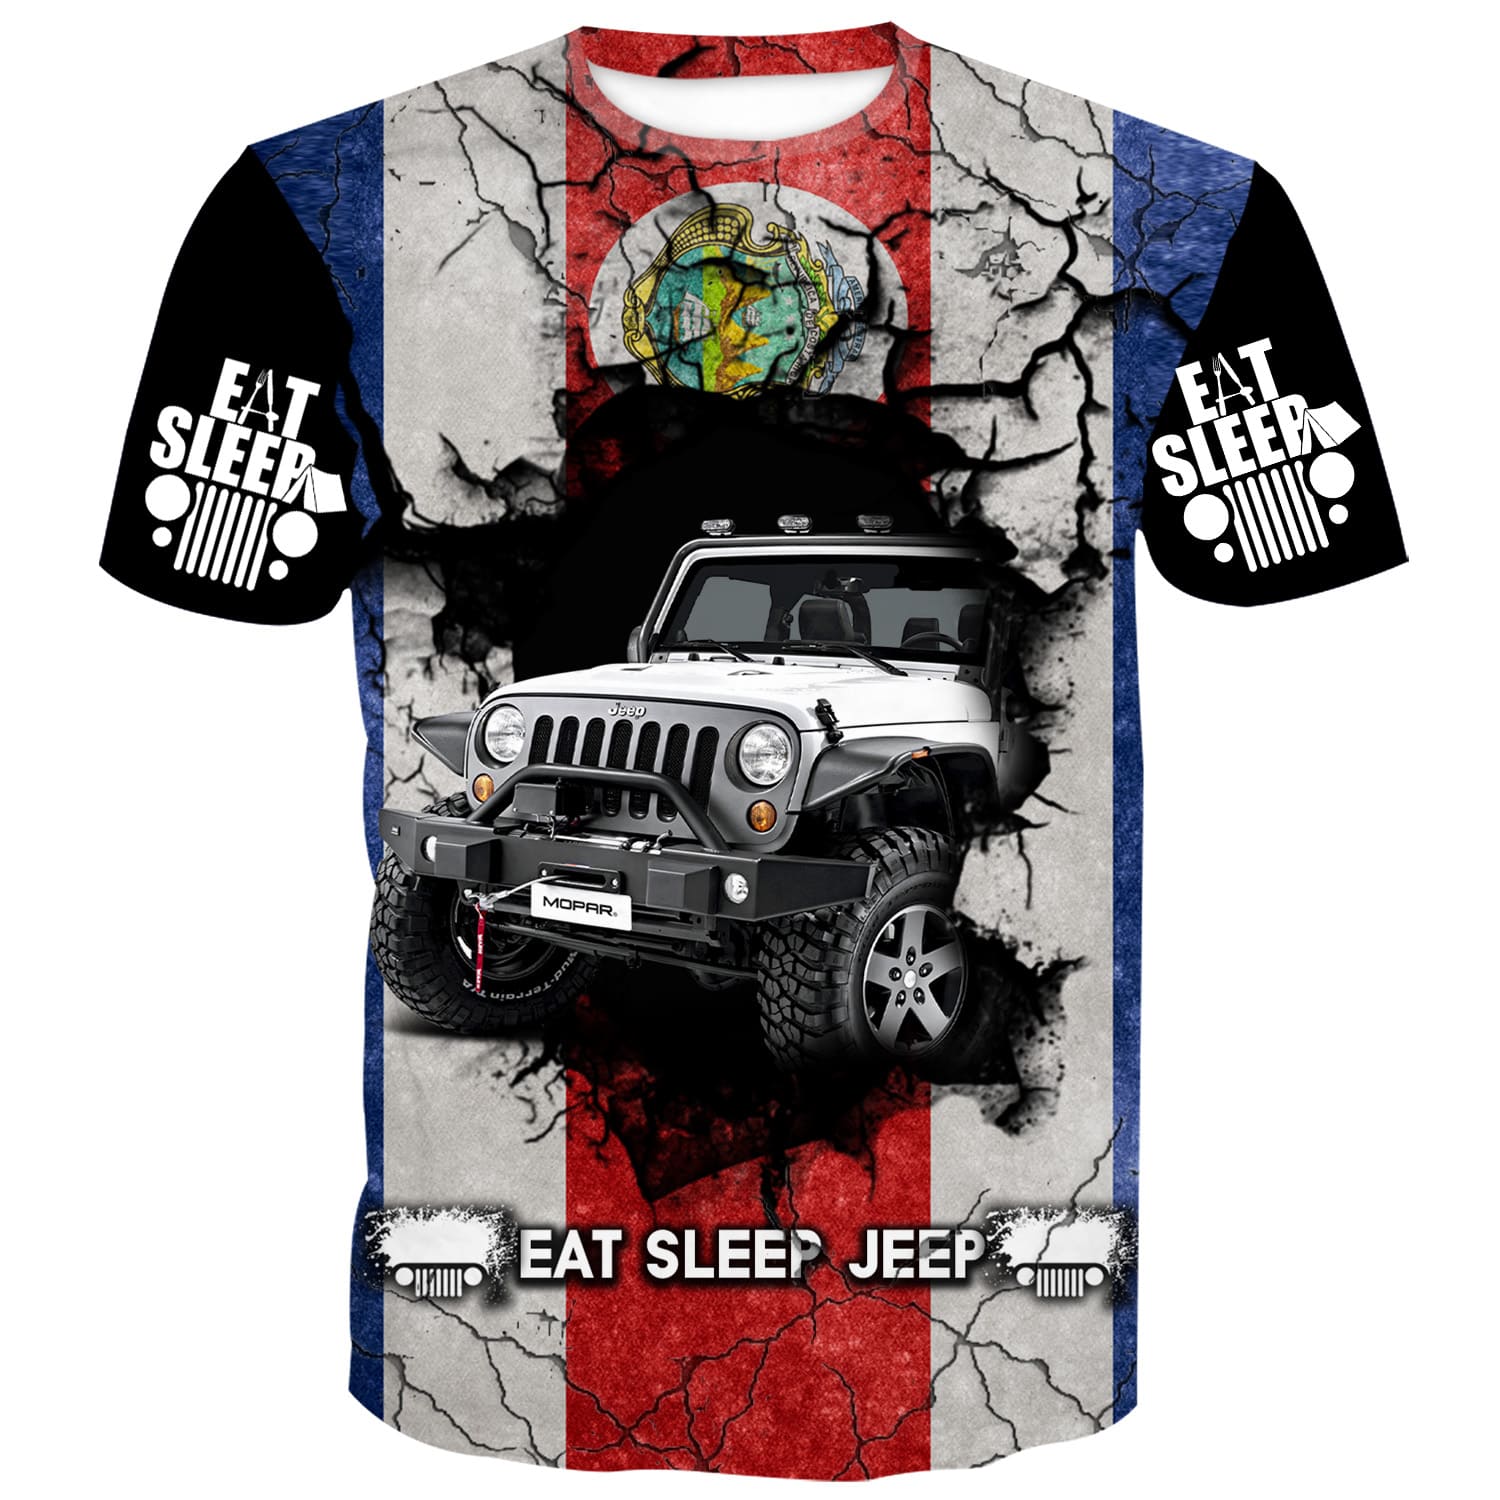 Eat Sleep Jeep Flag - Costa Rica